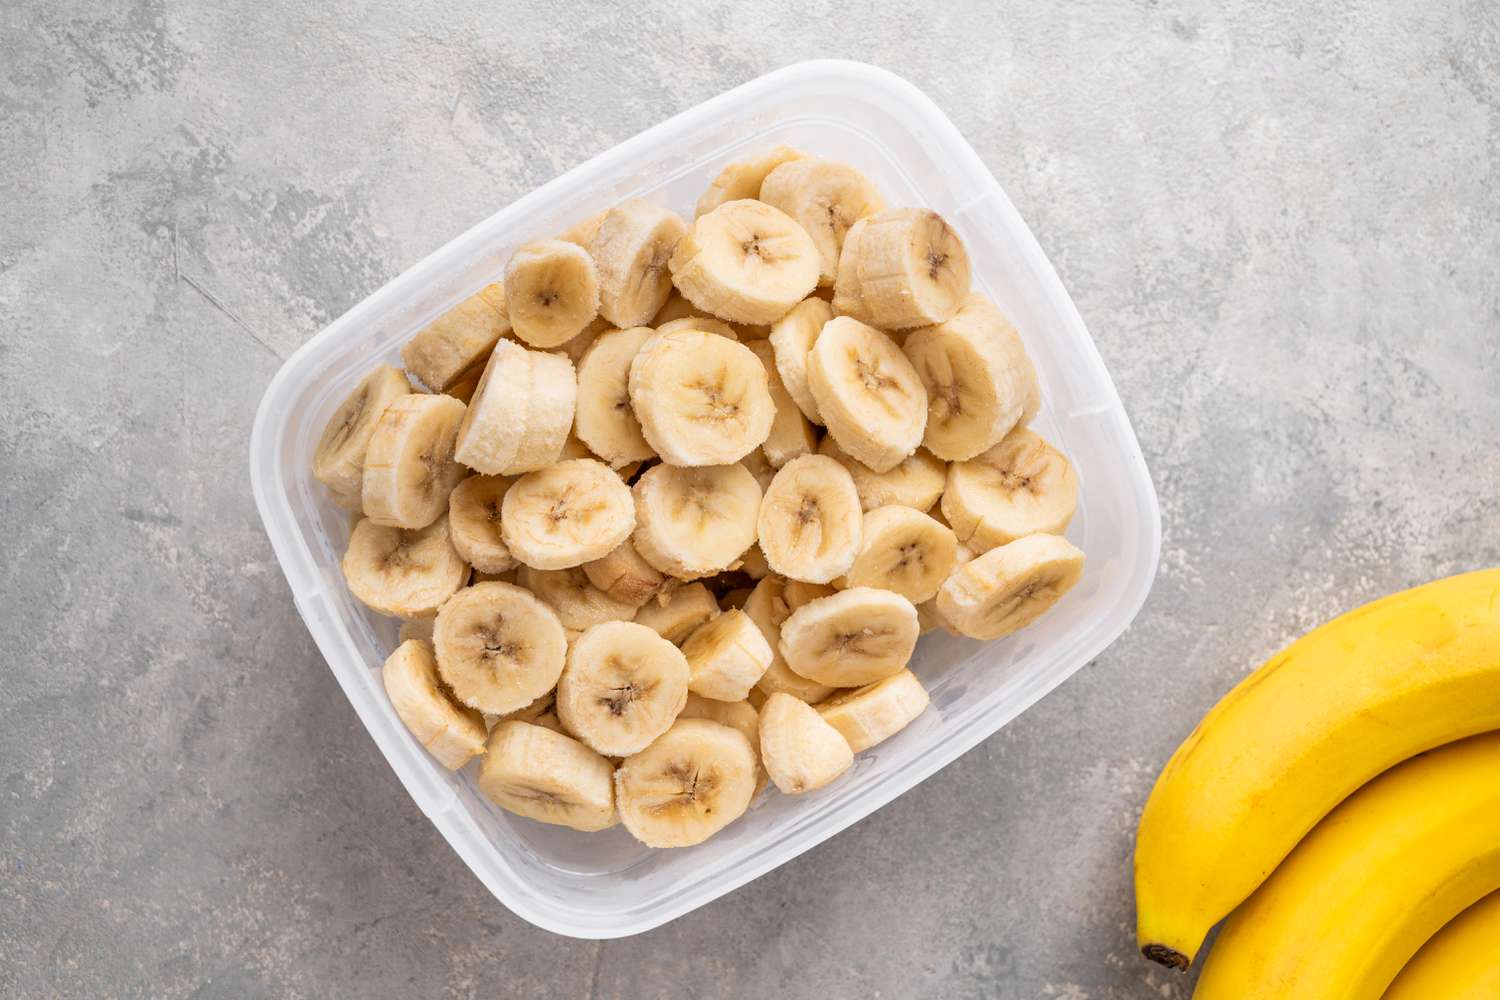 how-to-cut-a-frozen-banana